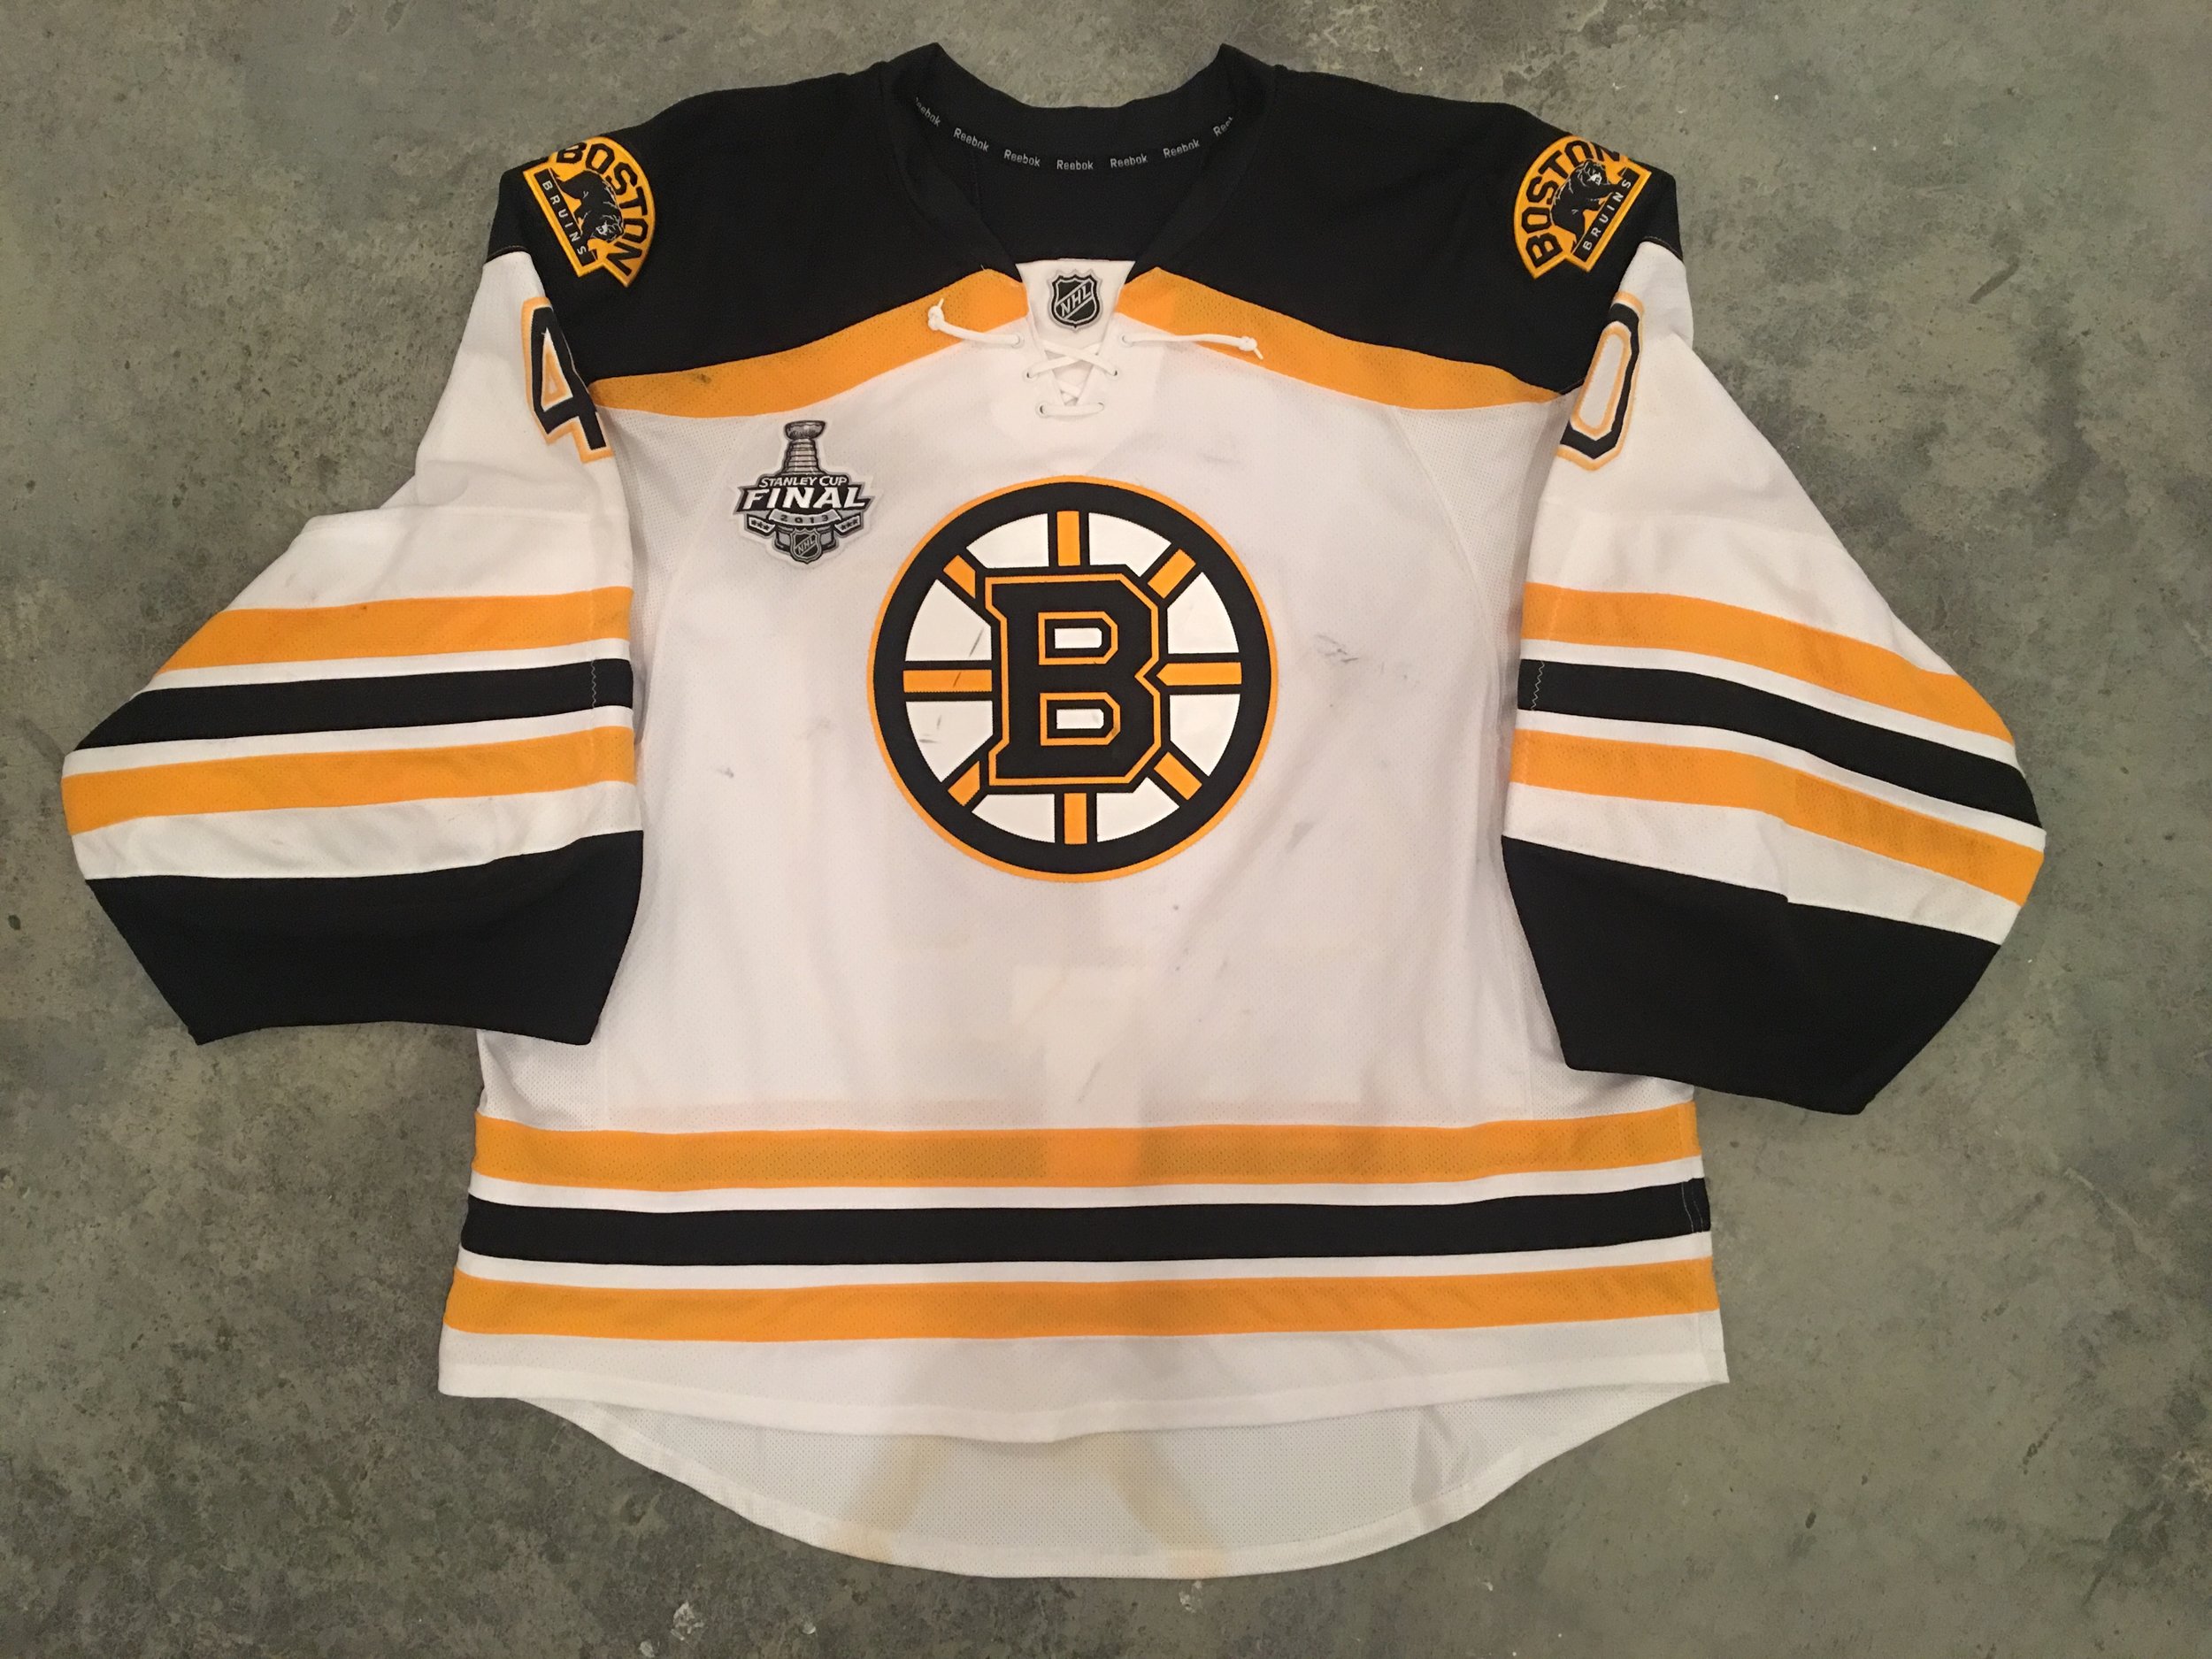 Tuukka Rask Boston Providence Bruins game worn jersey A